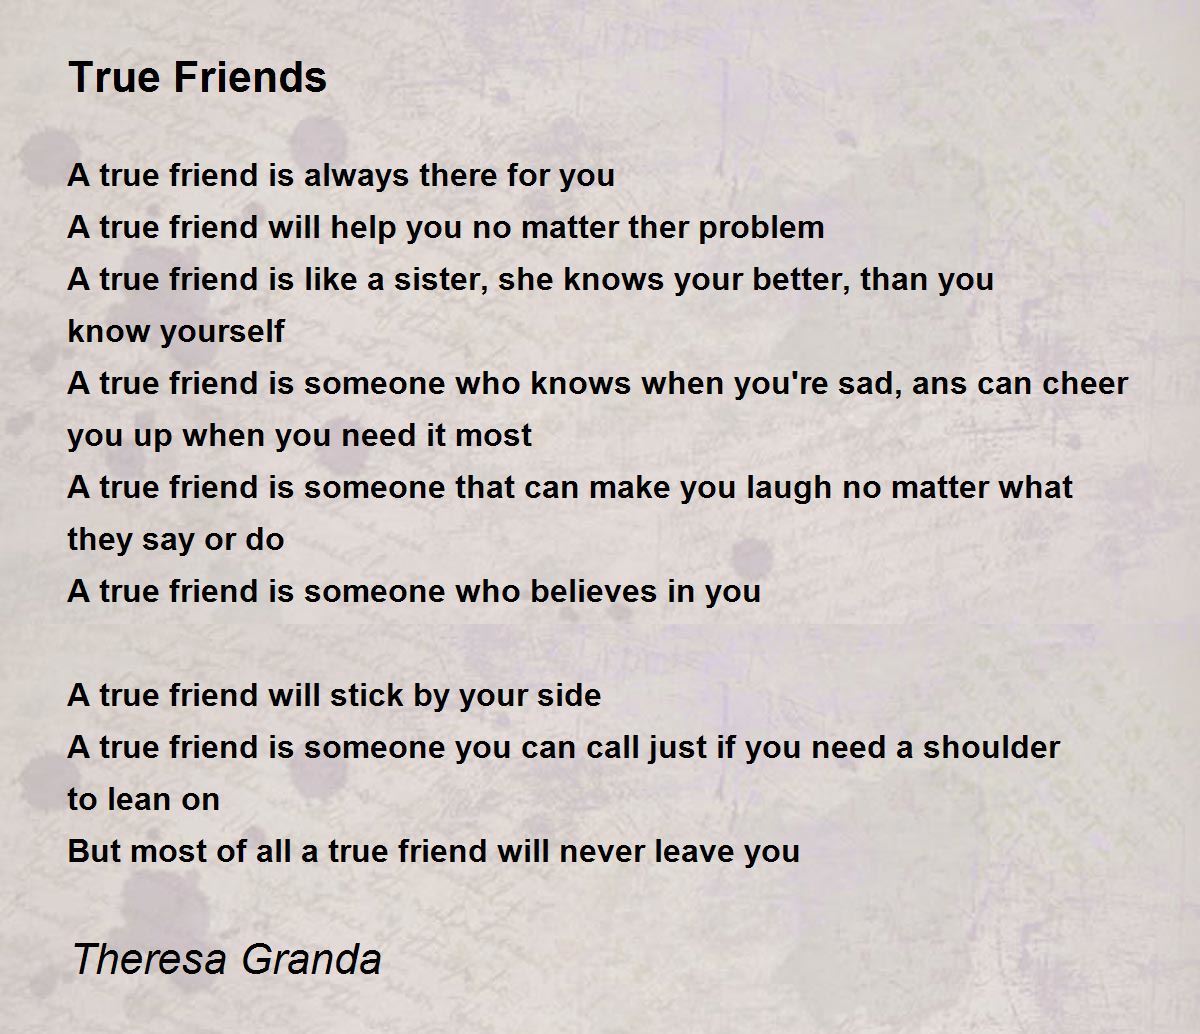 True Friends - True Friends Poem by Theresa Granda